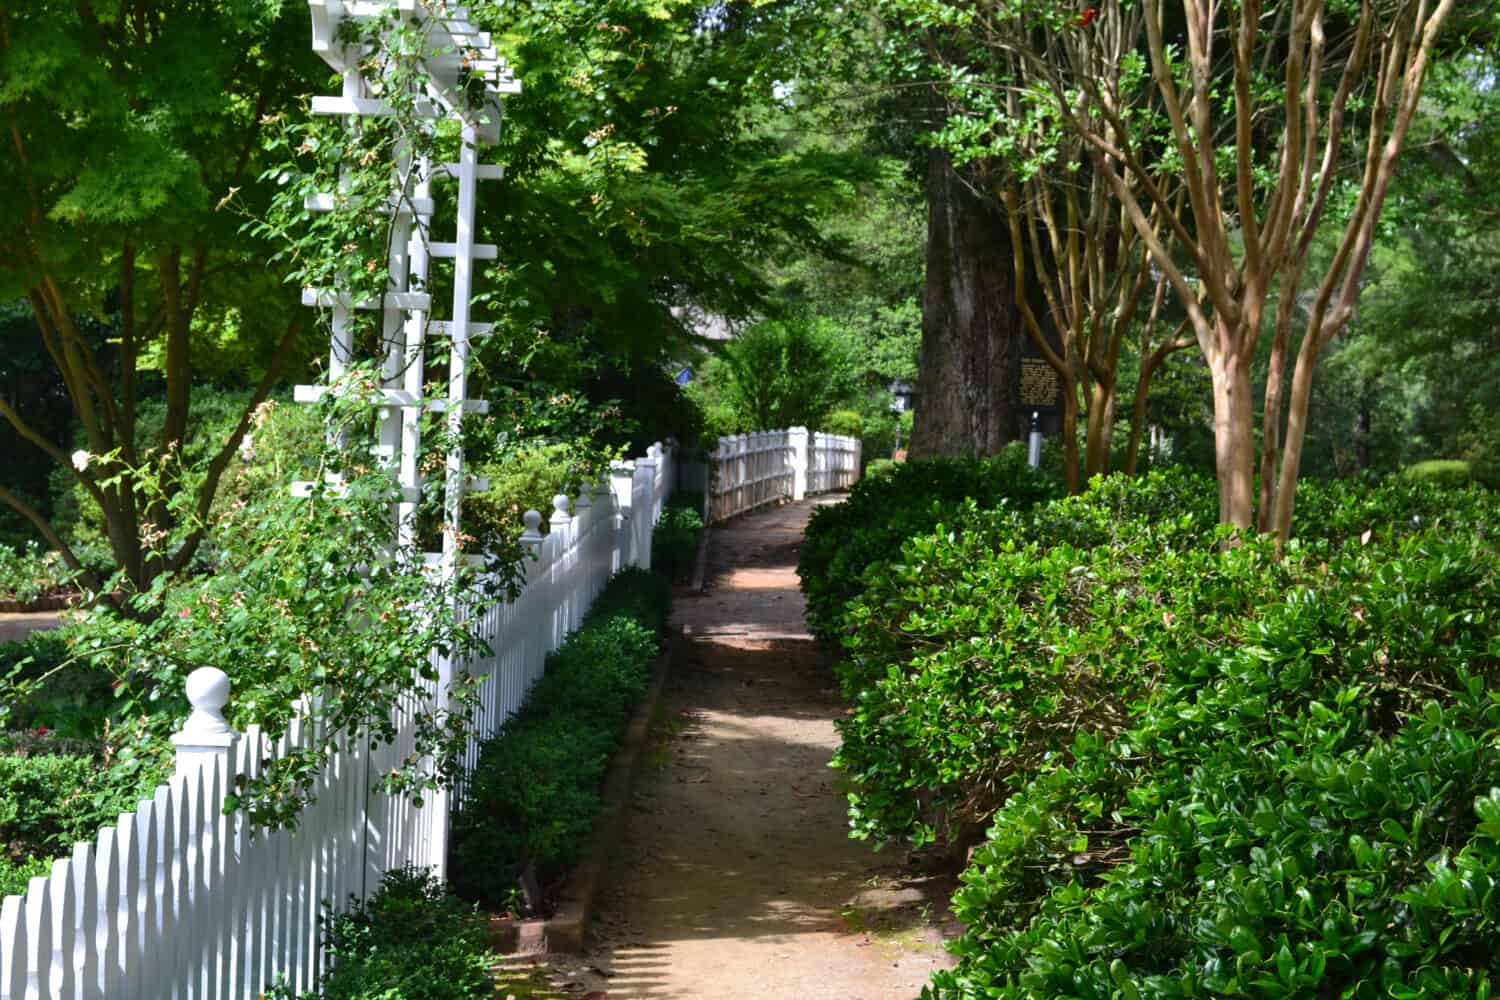 Sidewalk through the village of Pinehurst in North Carolina